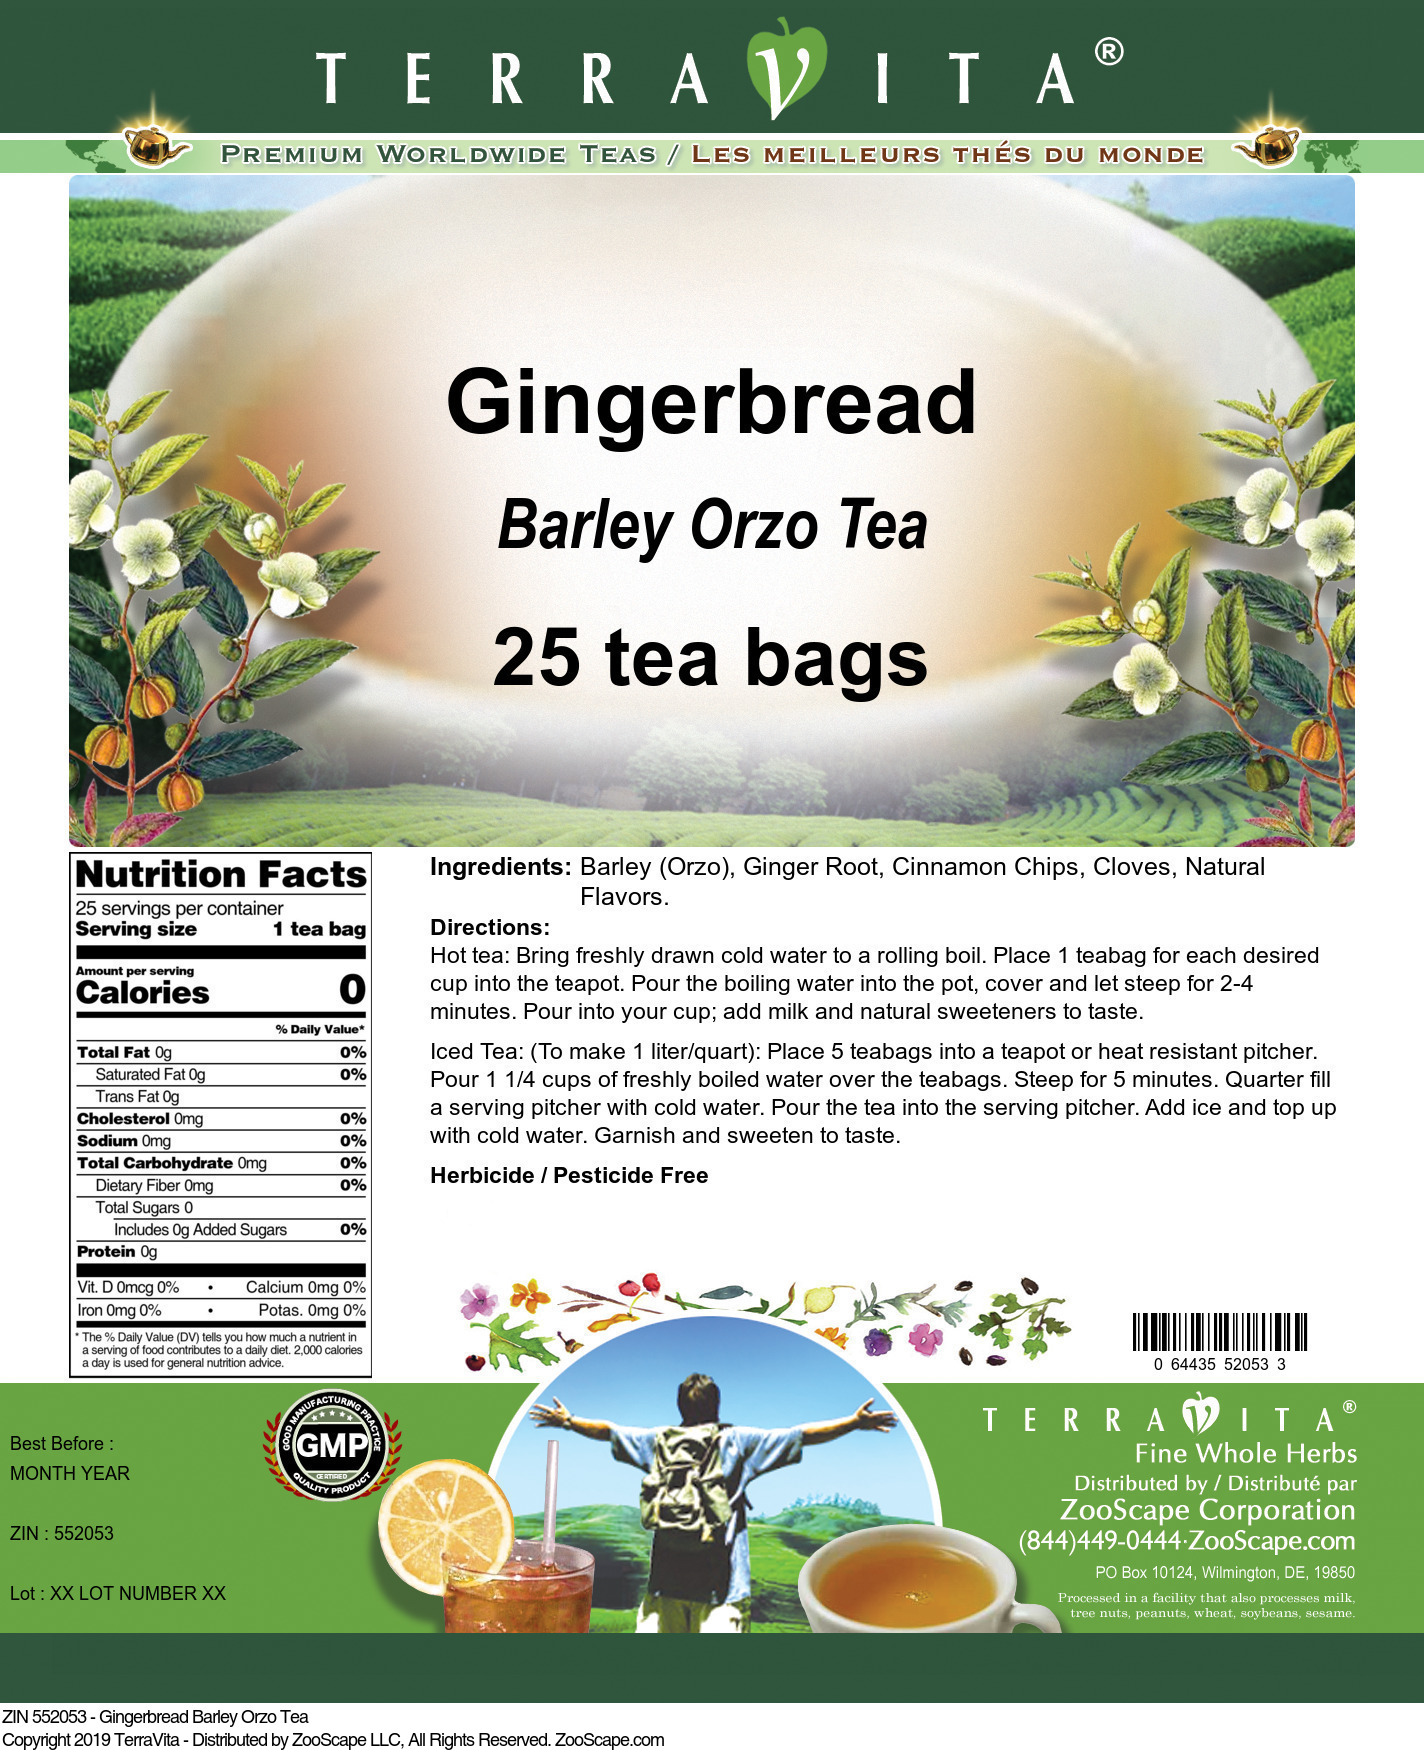 Gingerbread Barley Orzo Tea - Label